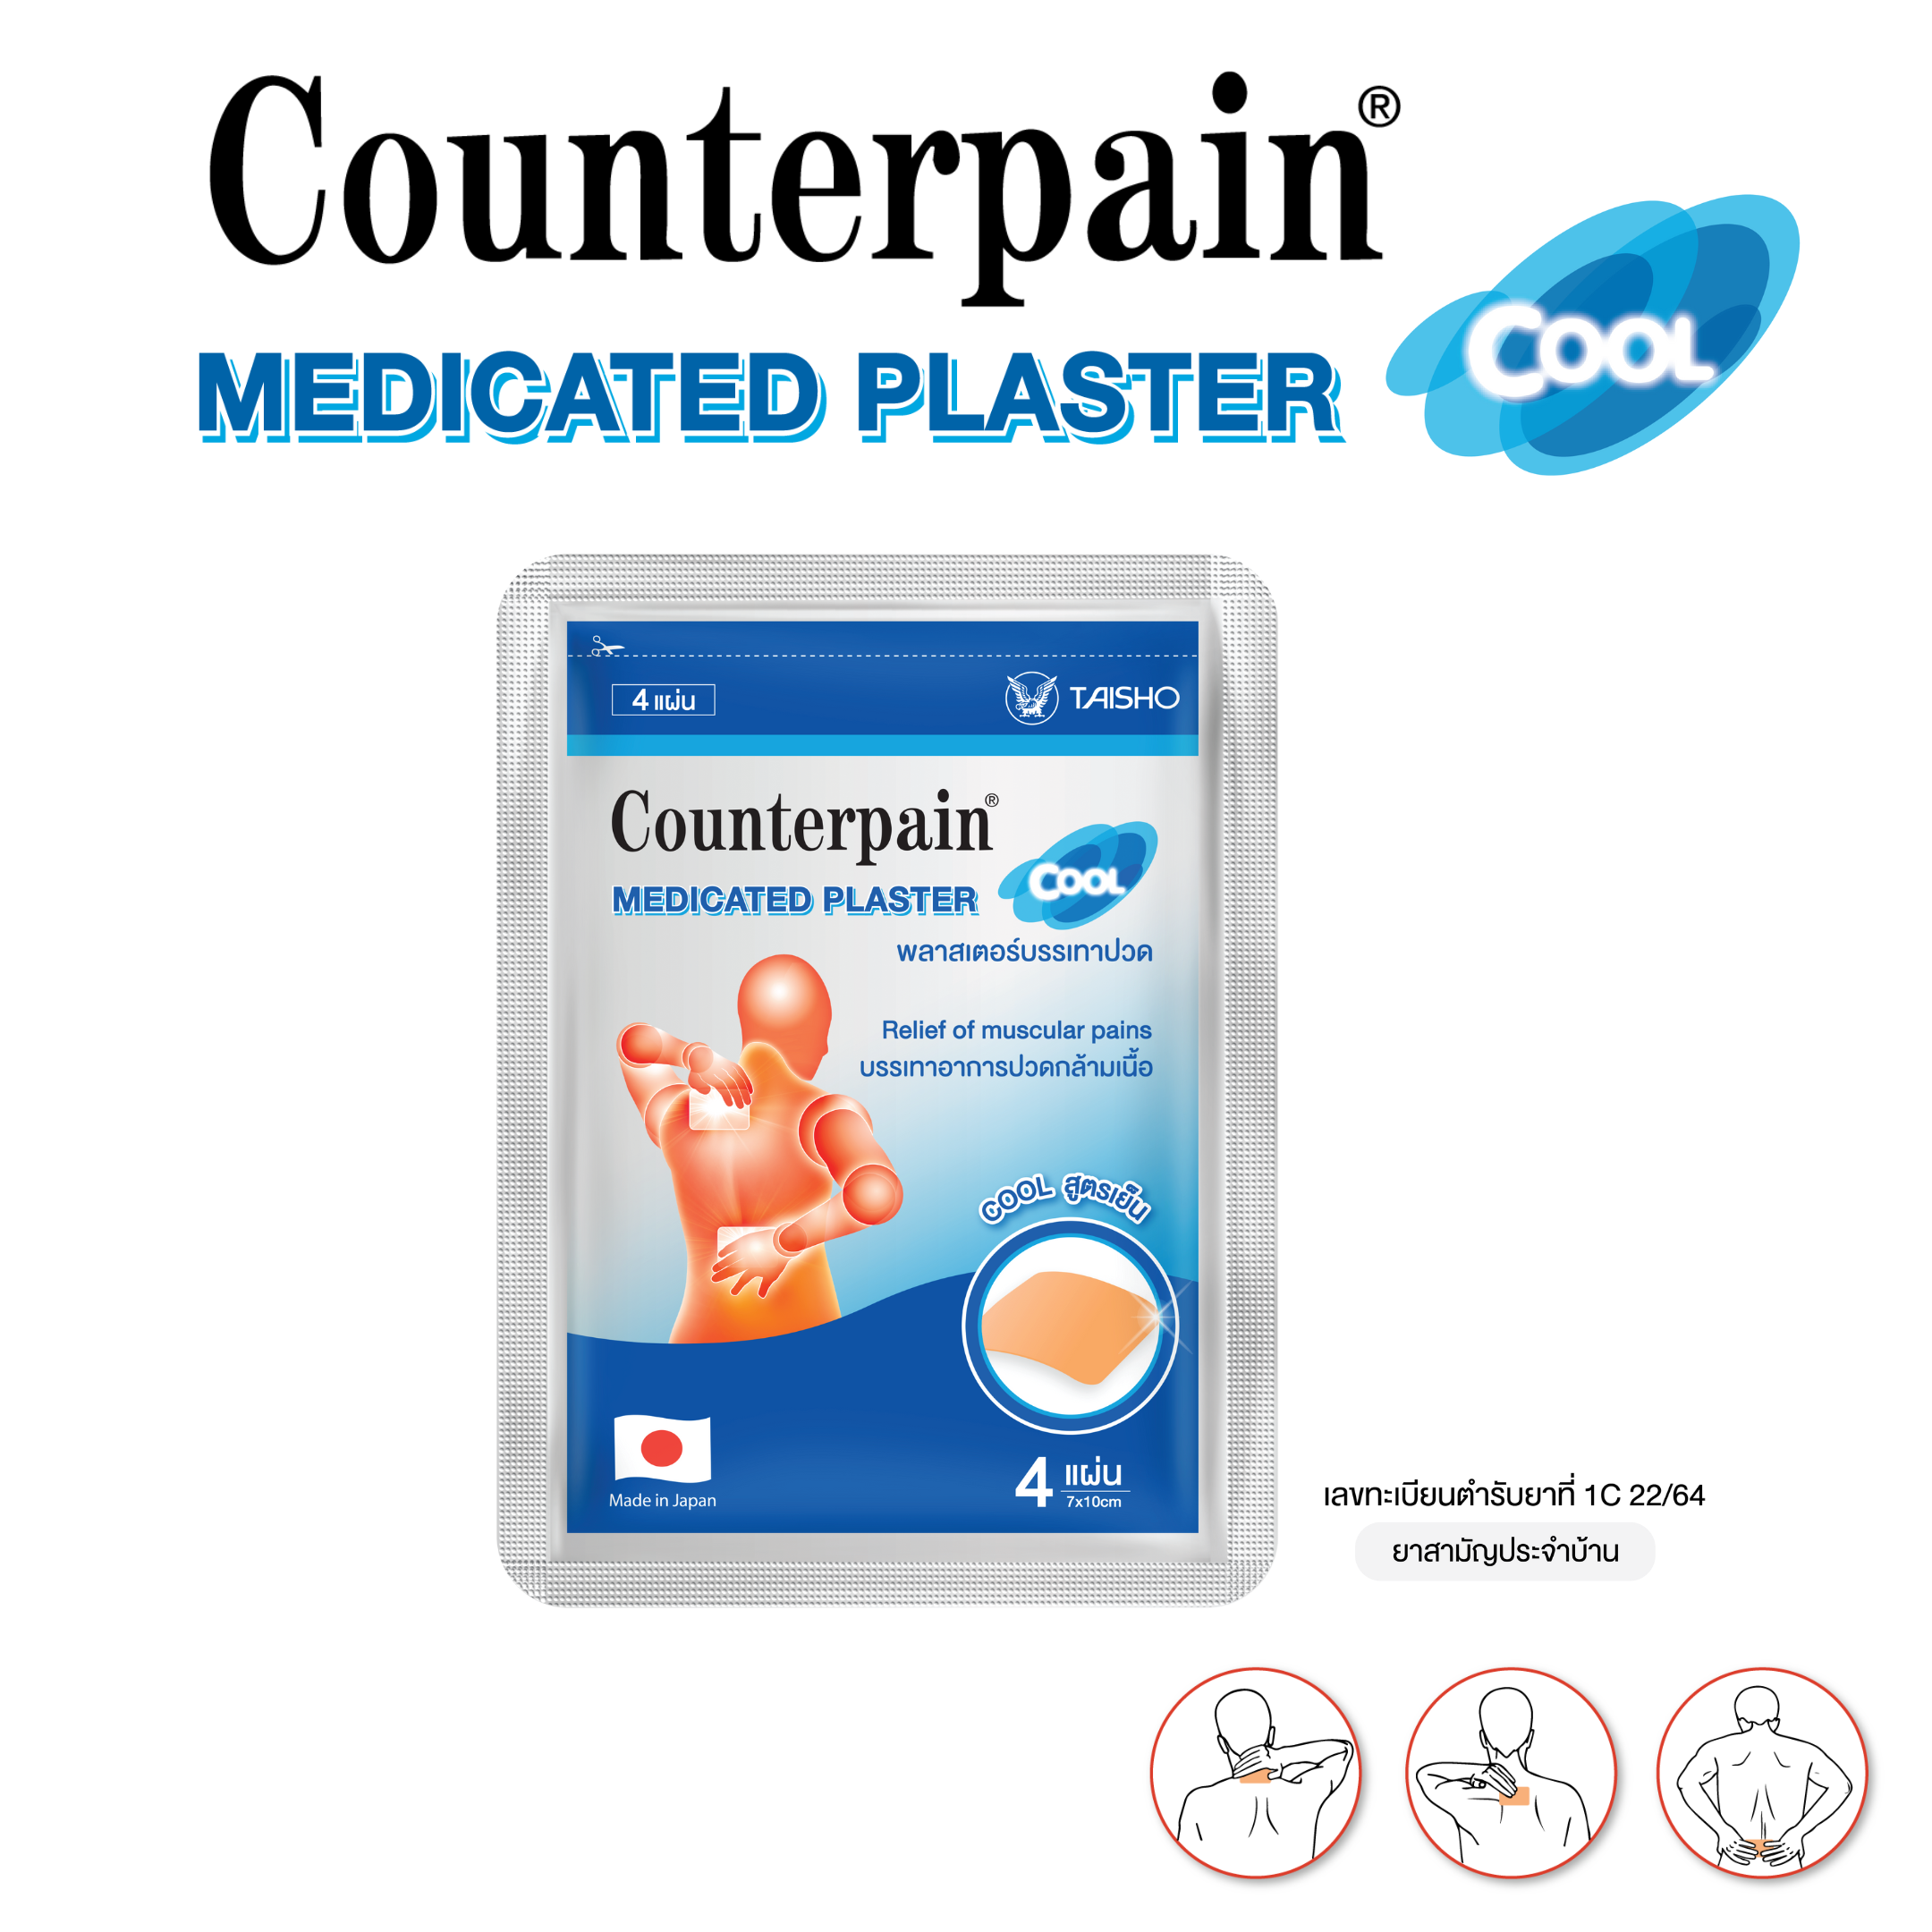 Counterpain Medicated Plaster Cool - พลาสเตอร์บรรเทาปวด สูตรเย็น